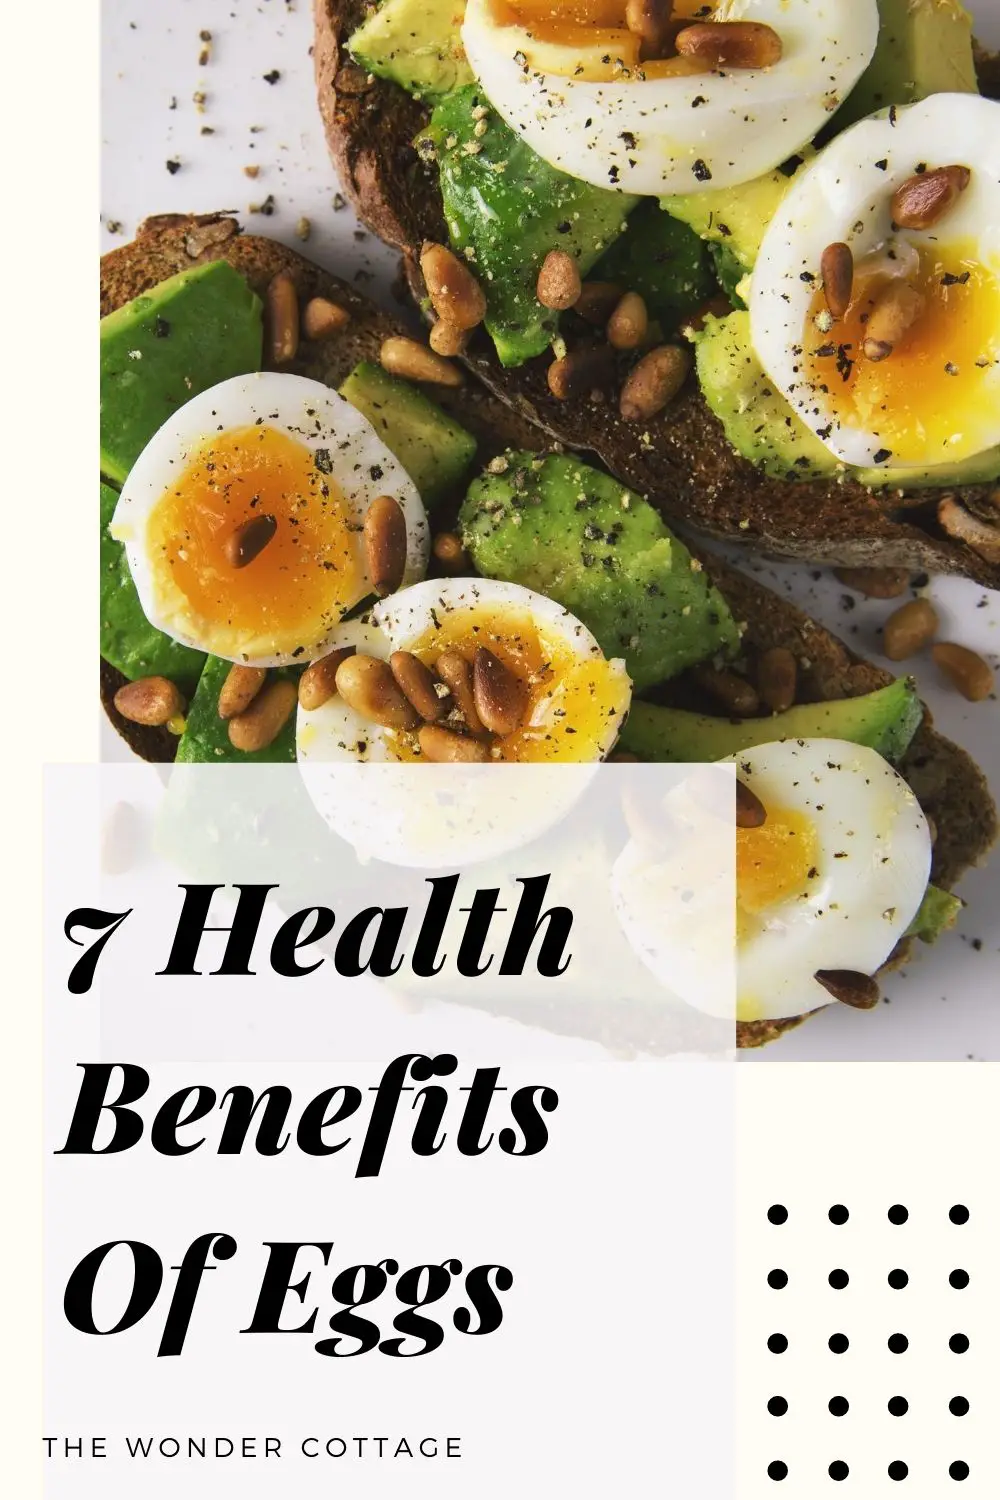 7 health benefits of eggs